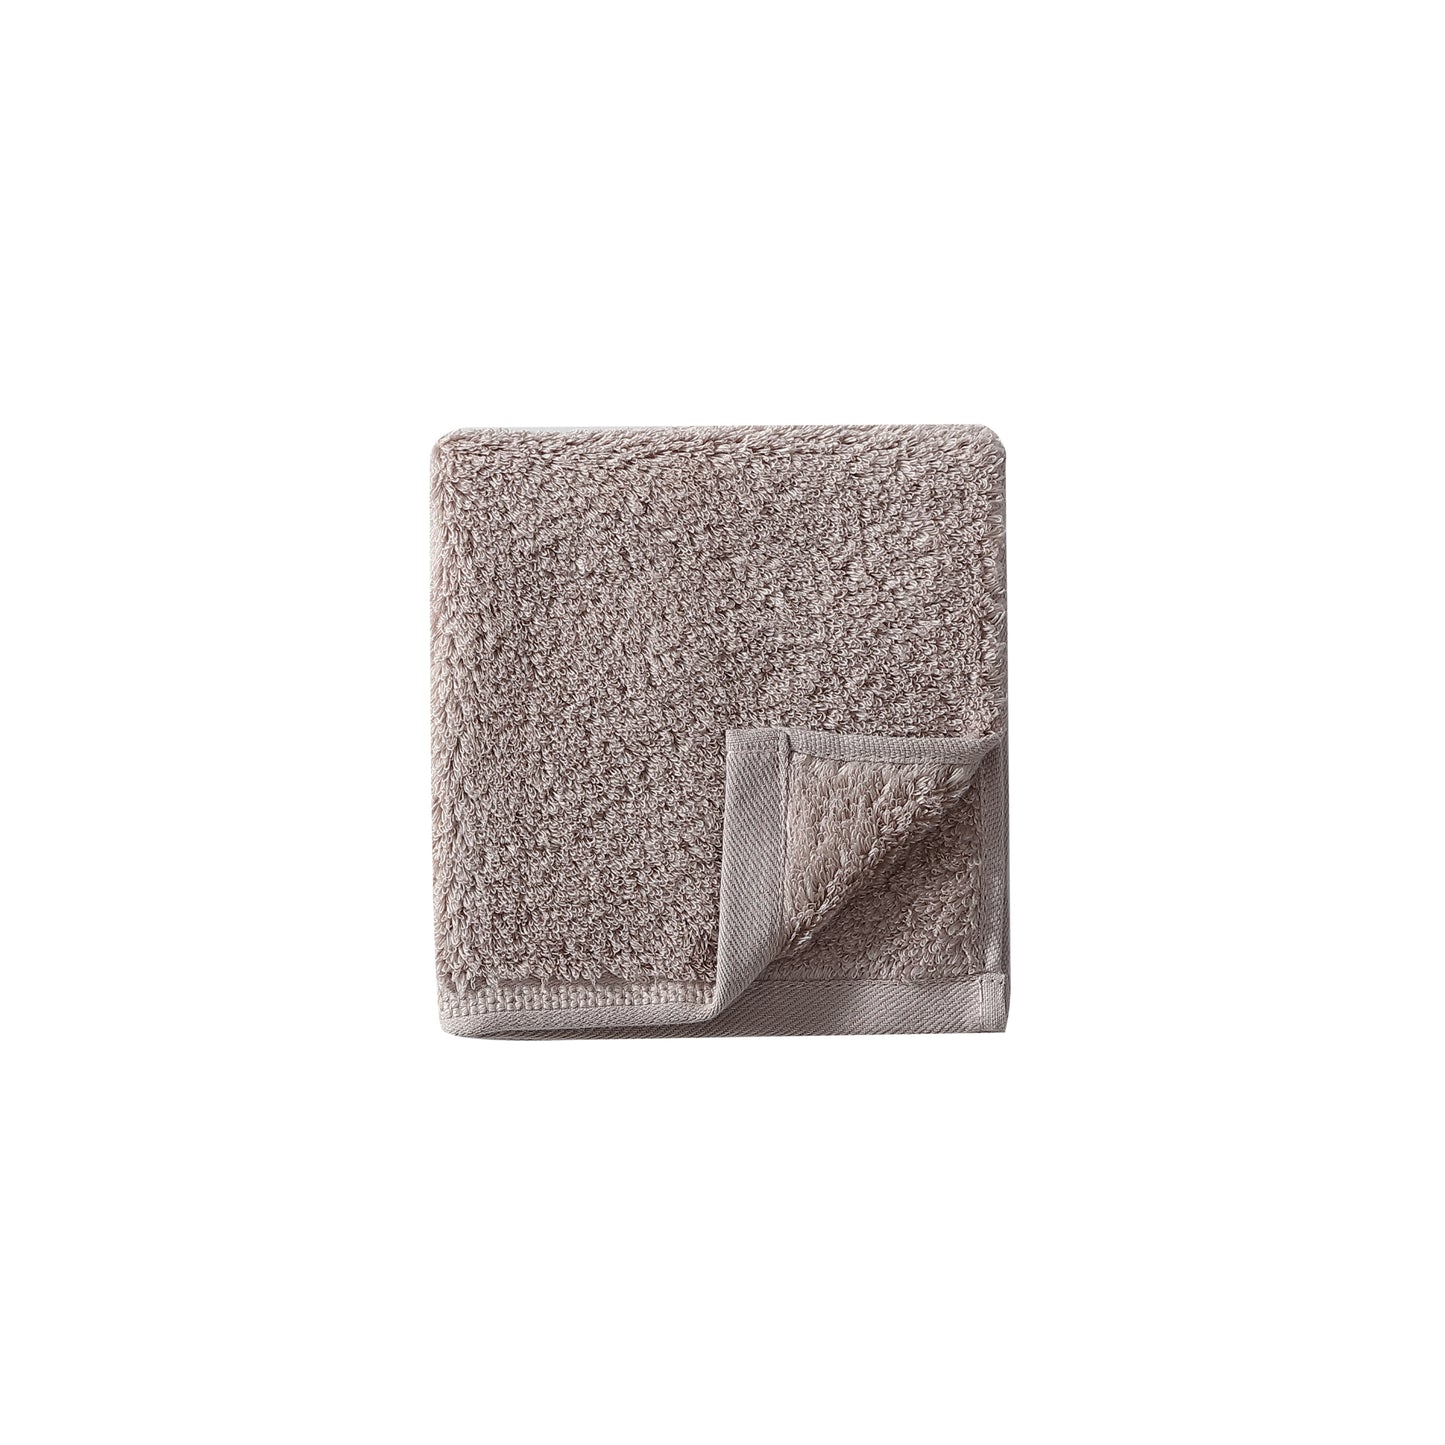 Uchino Super Absorbent Towels